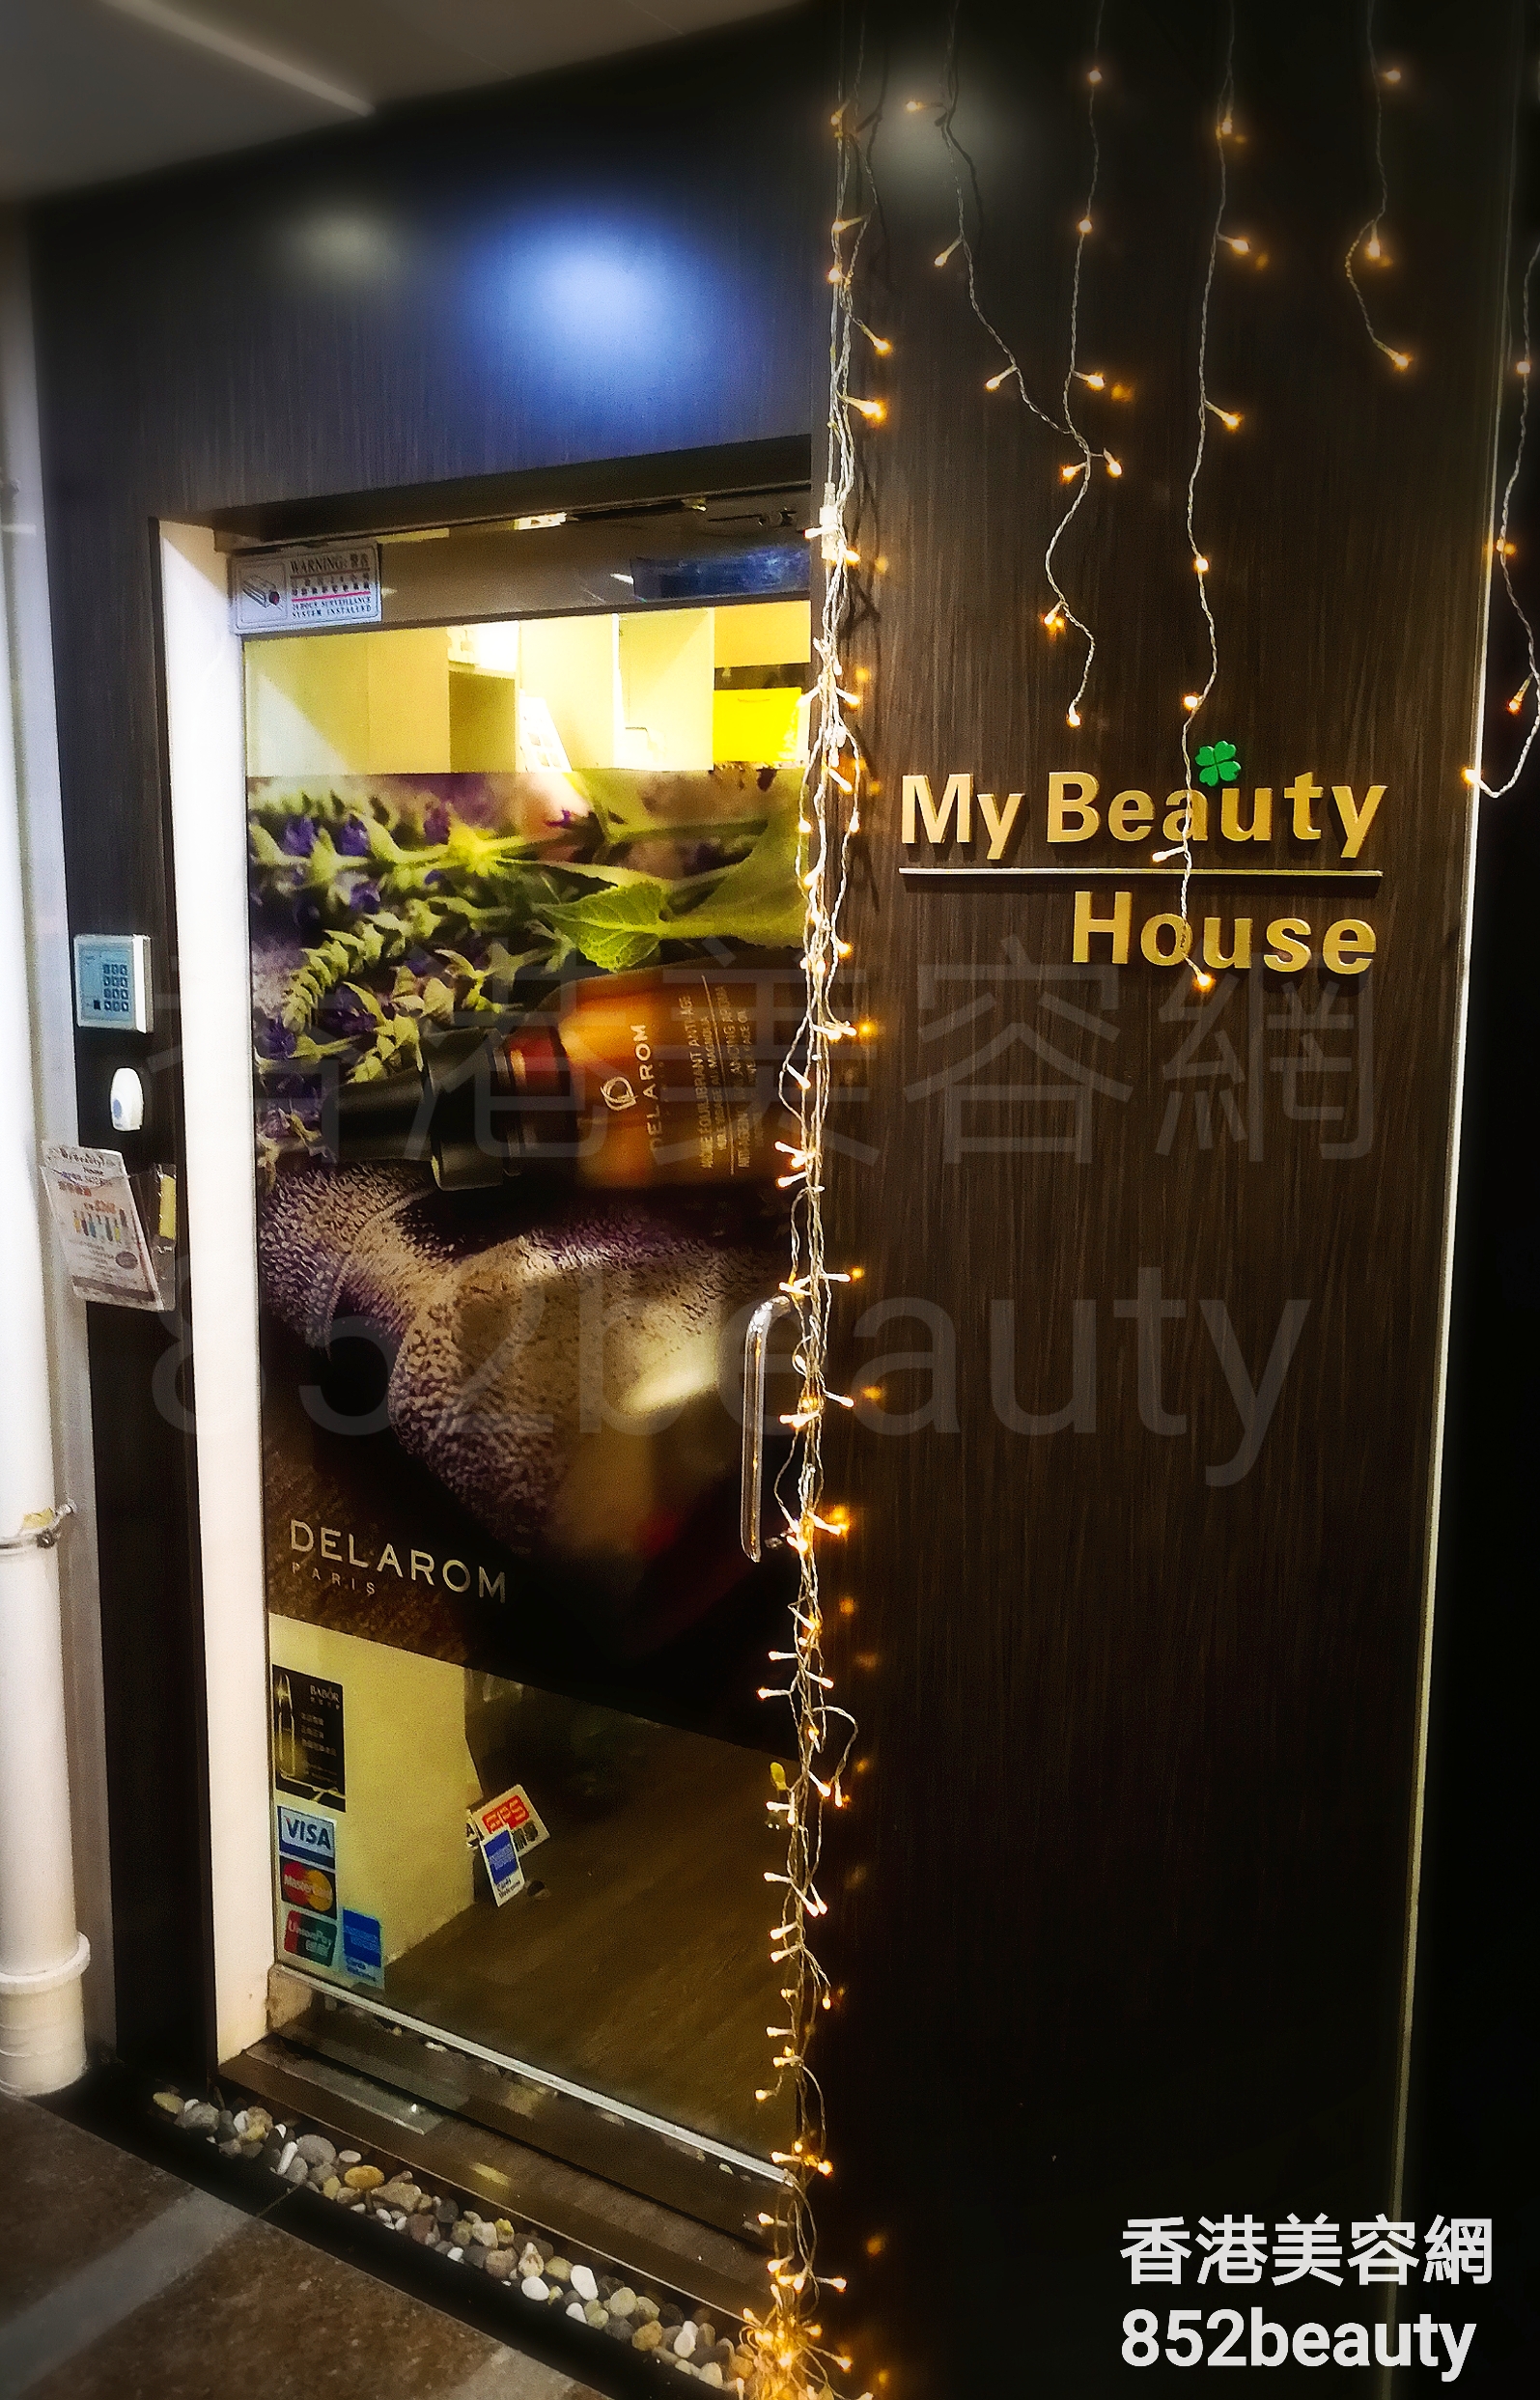 手脚护理: My Beauty House